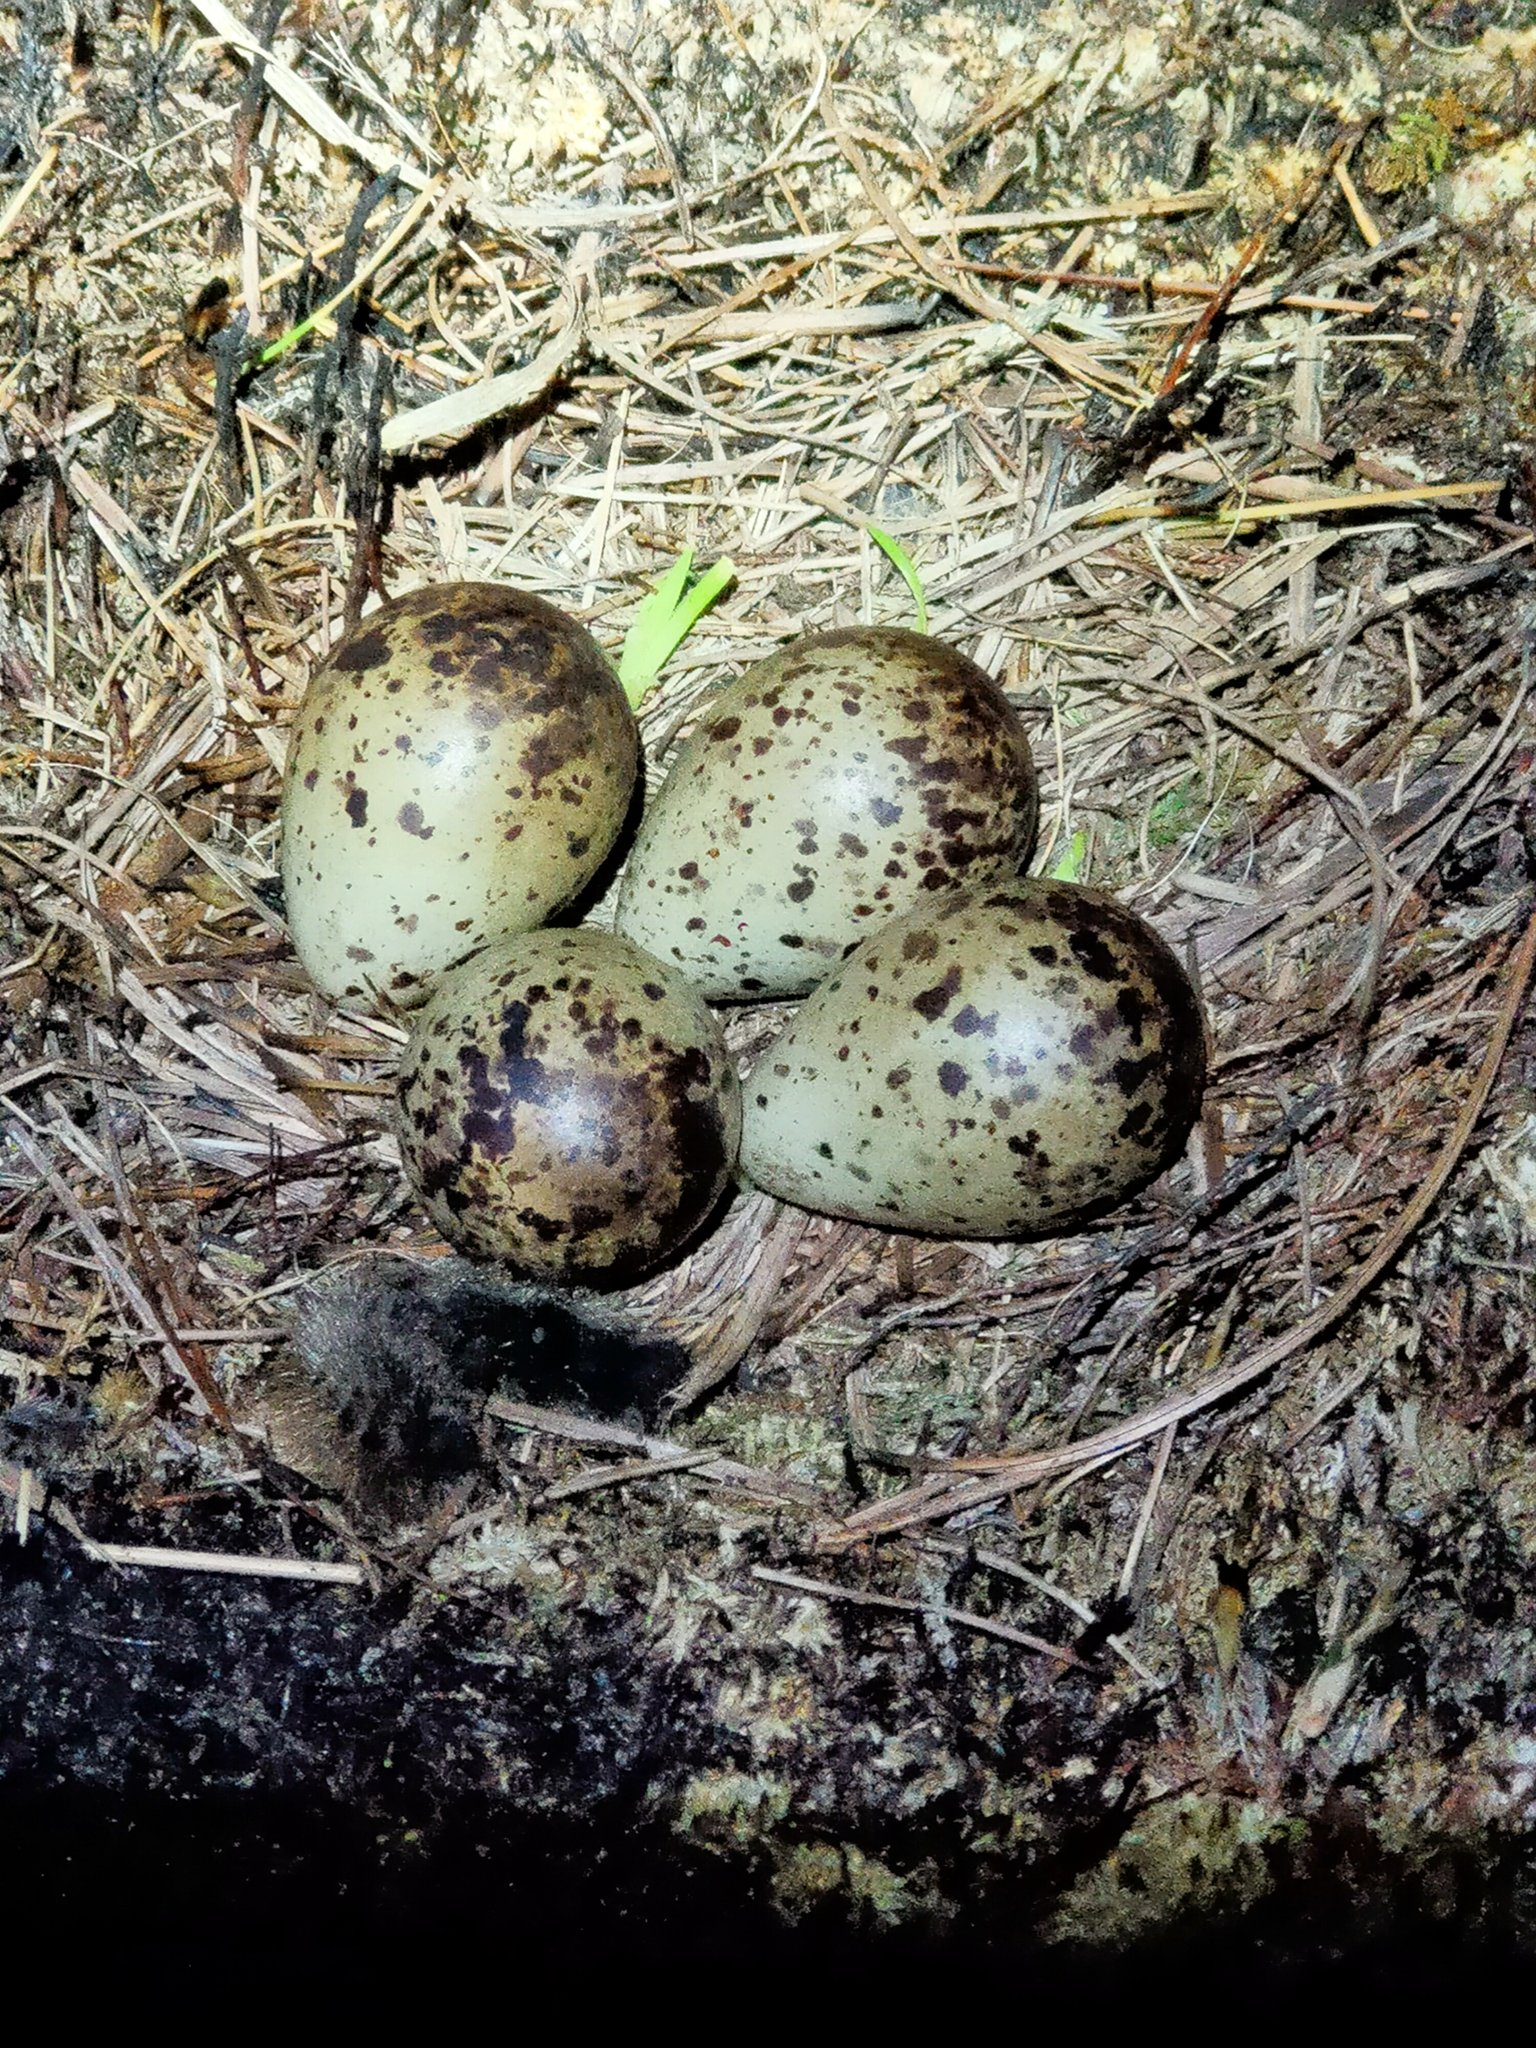 Spotted Redshank nest